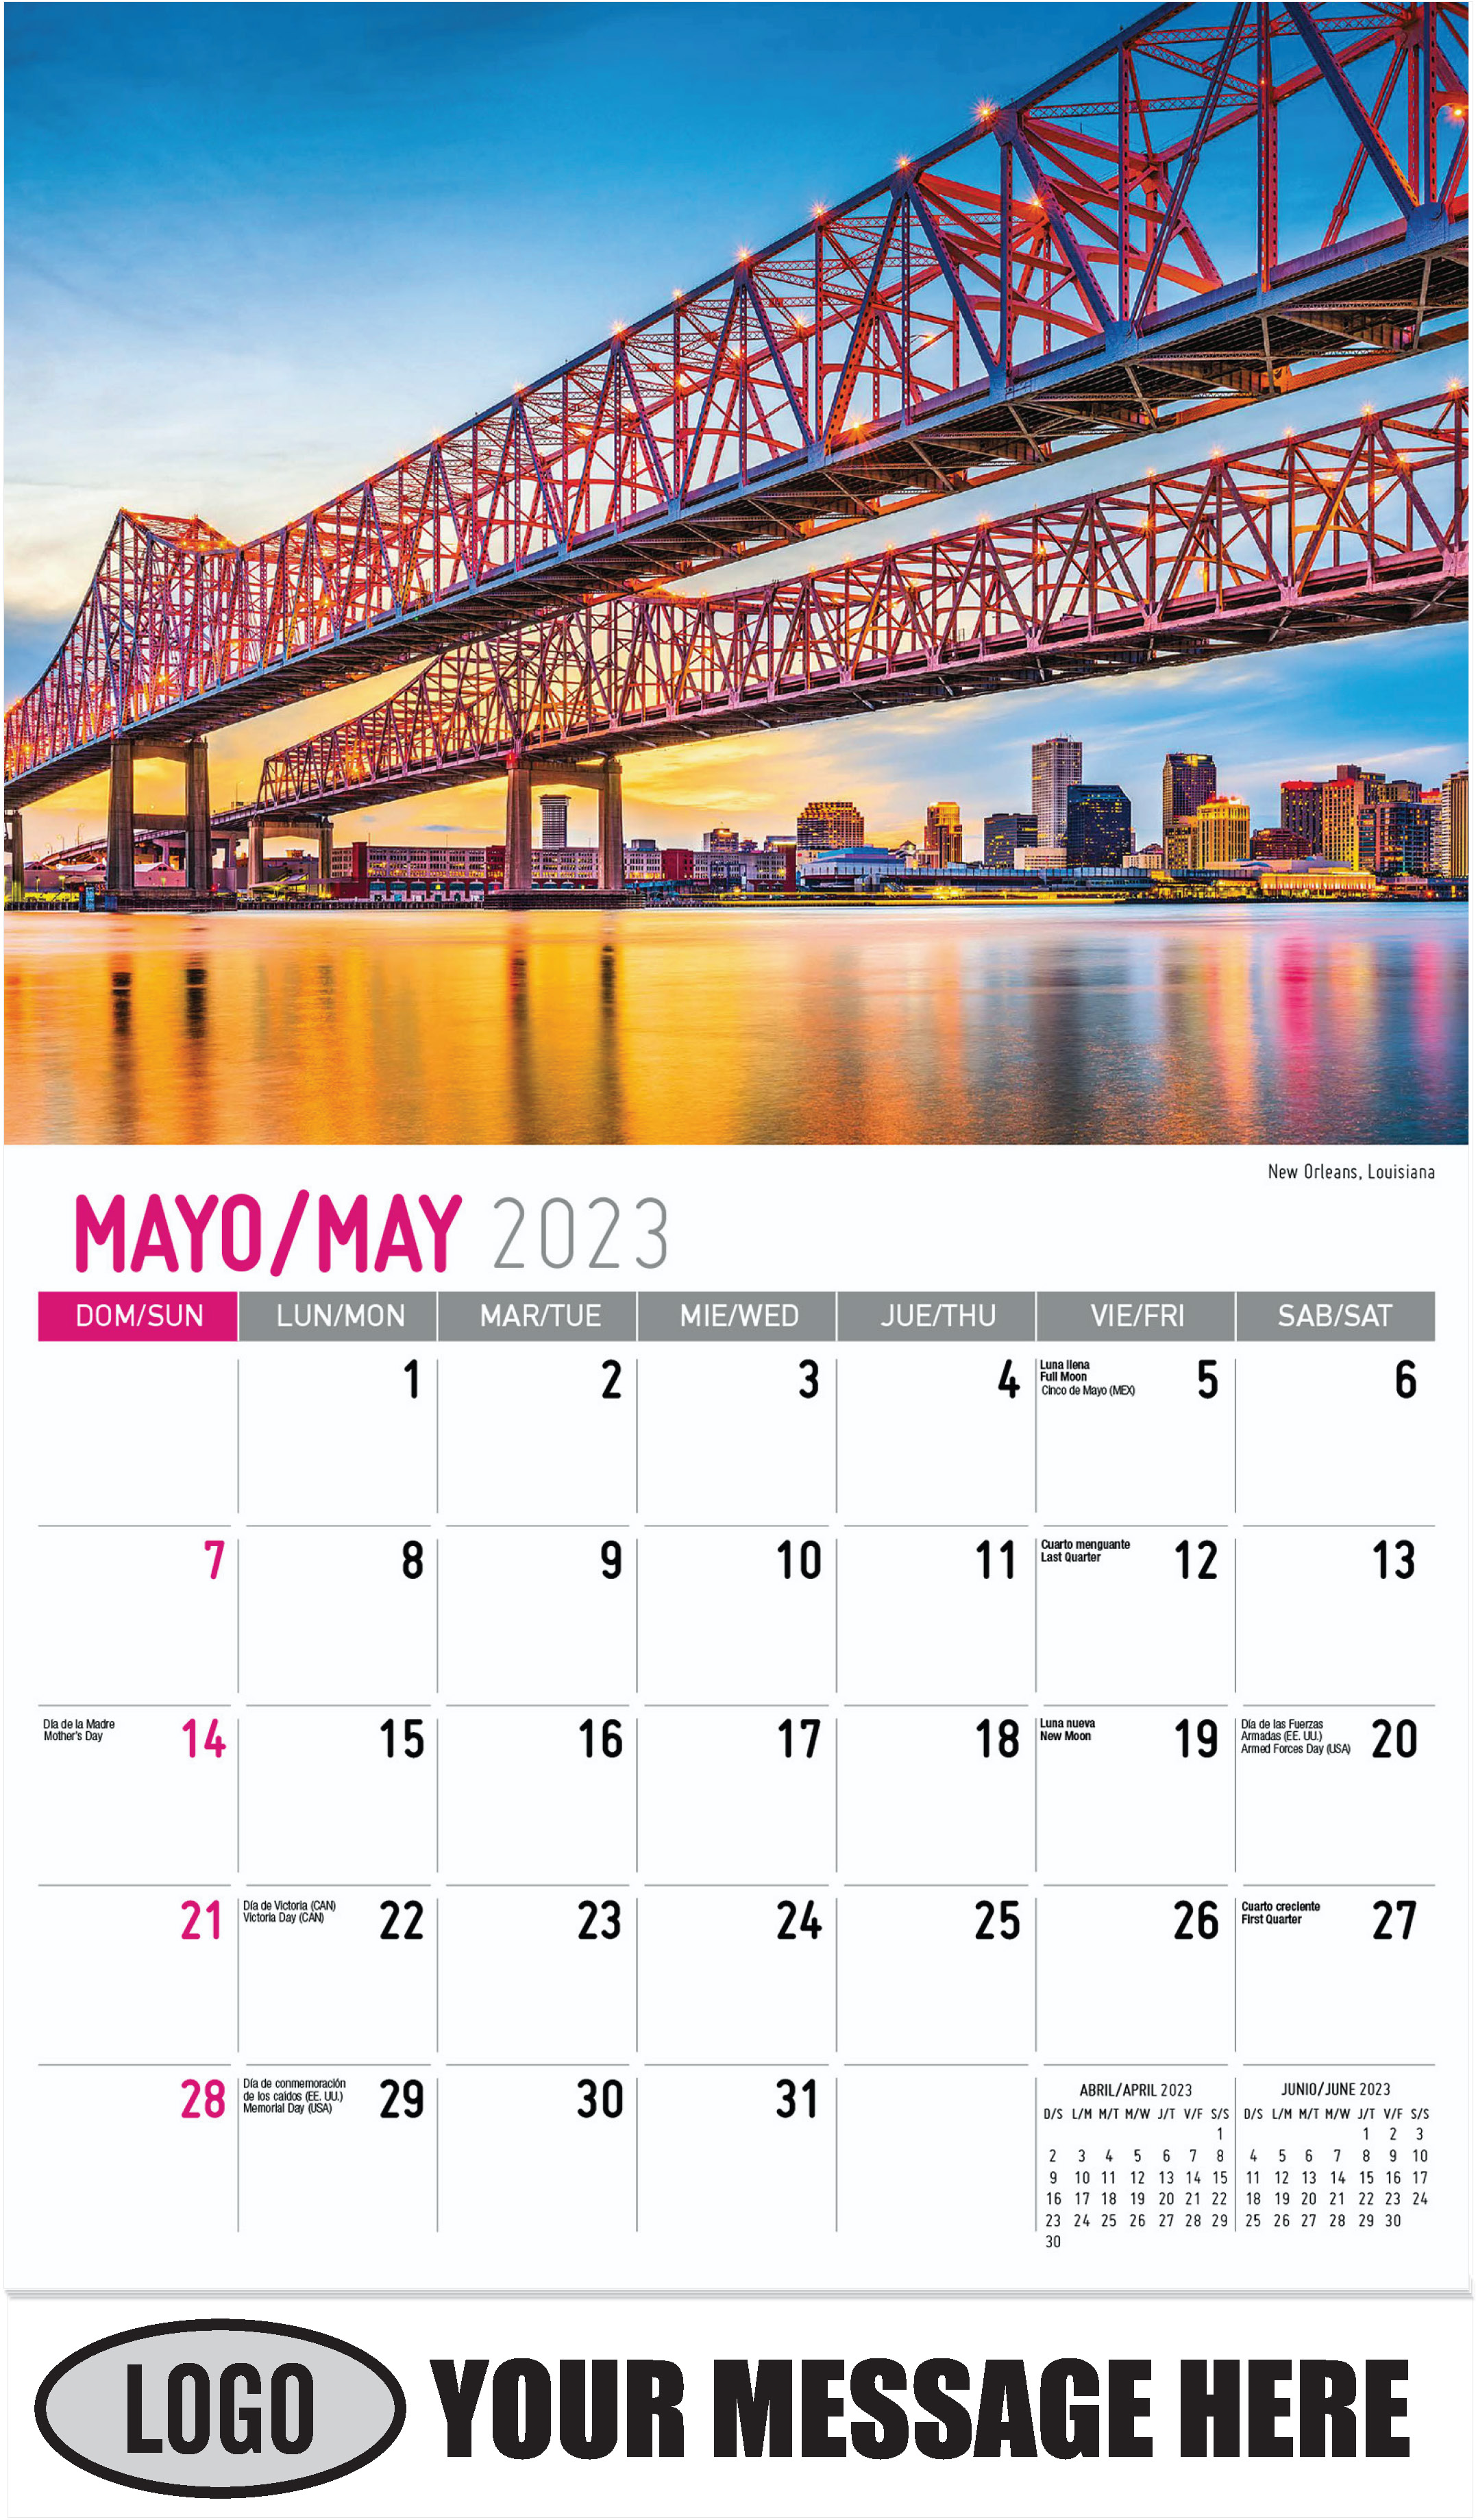 New Orleans, Louisiana - May - Scenes of America (Spanish-English bilingual) 2023 Promotional Calendar